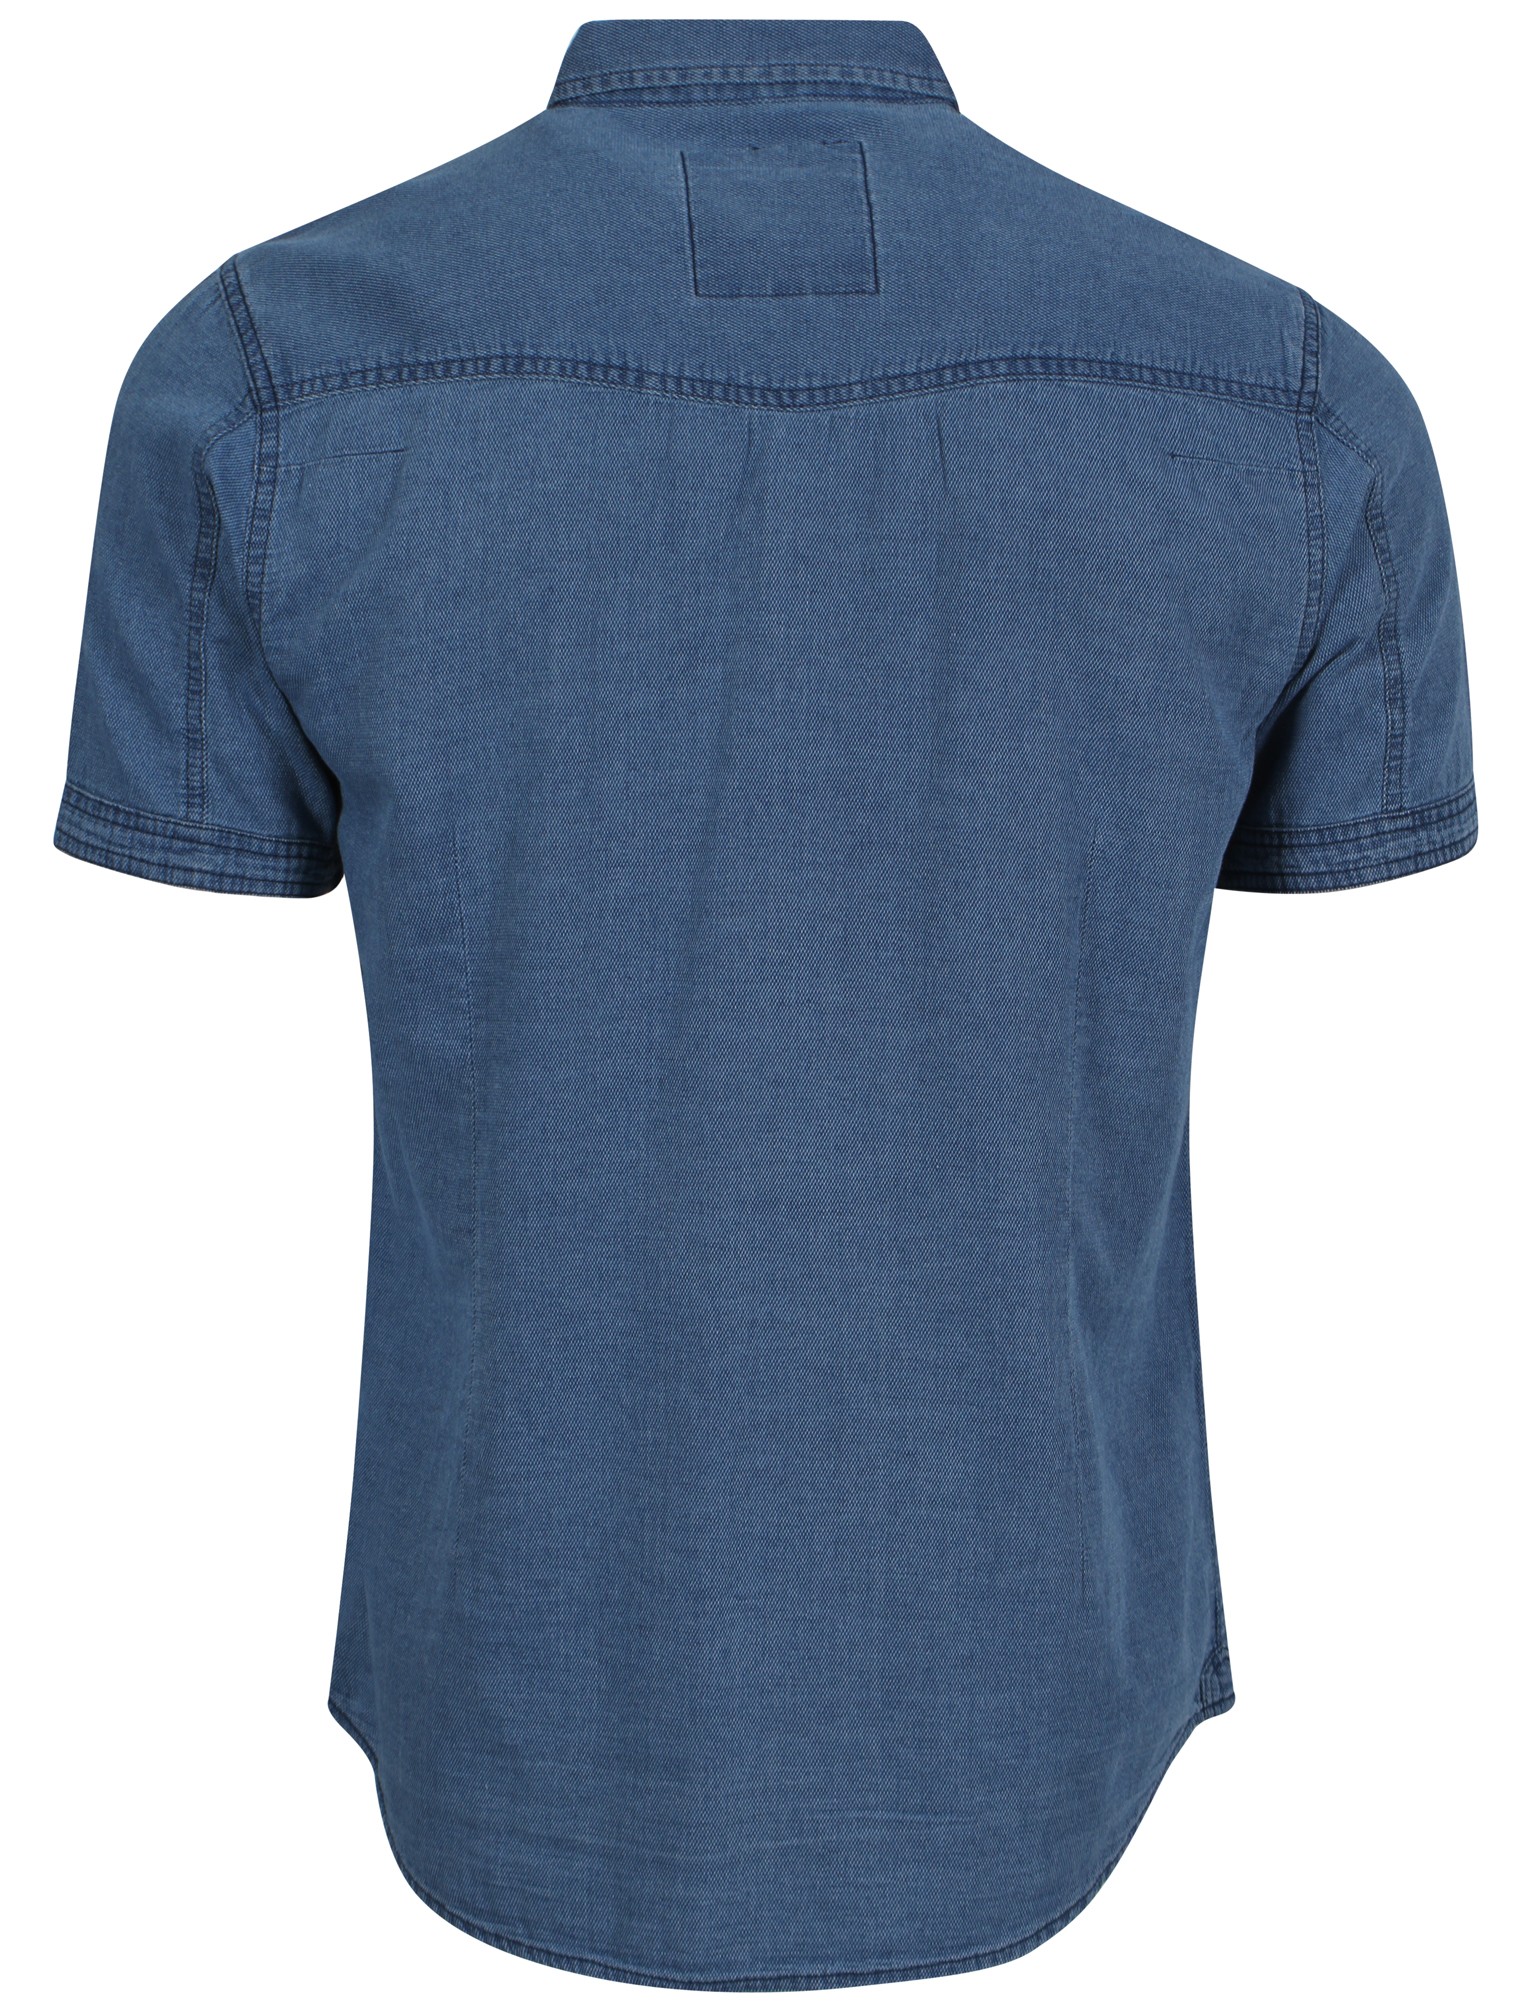 New Mens Tokyo Laundry Lockridge Short Sleeve Button Denim Shirt Top Size S-XXL